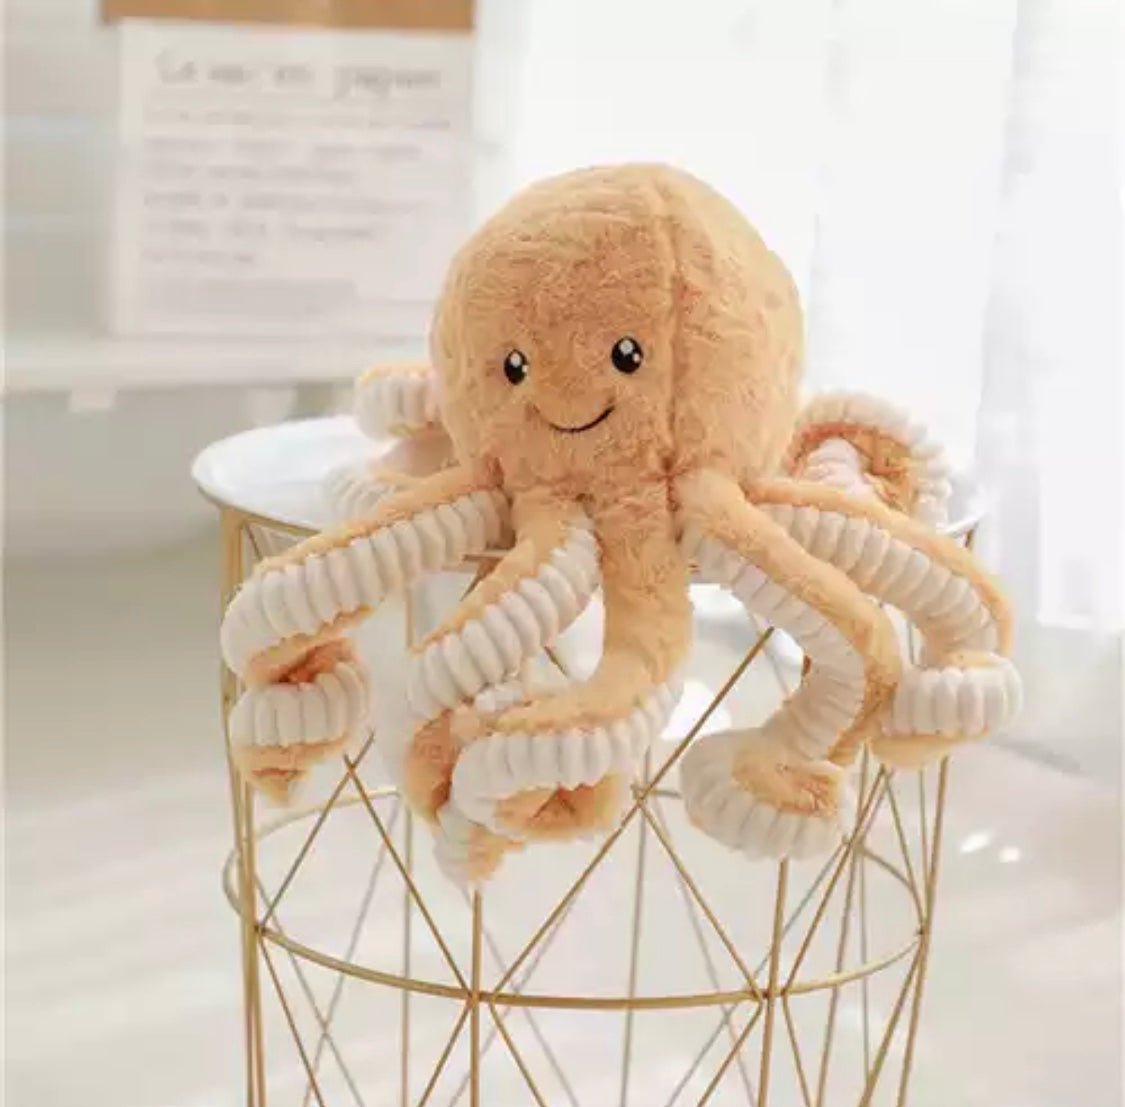 Octopus Plush